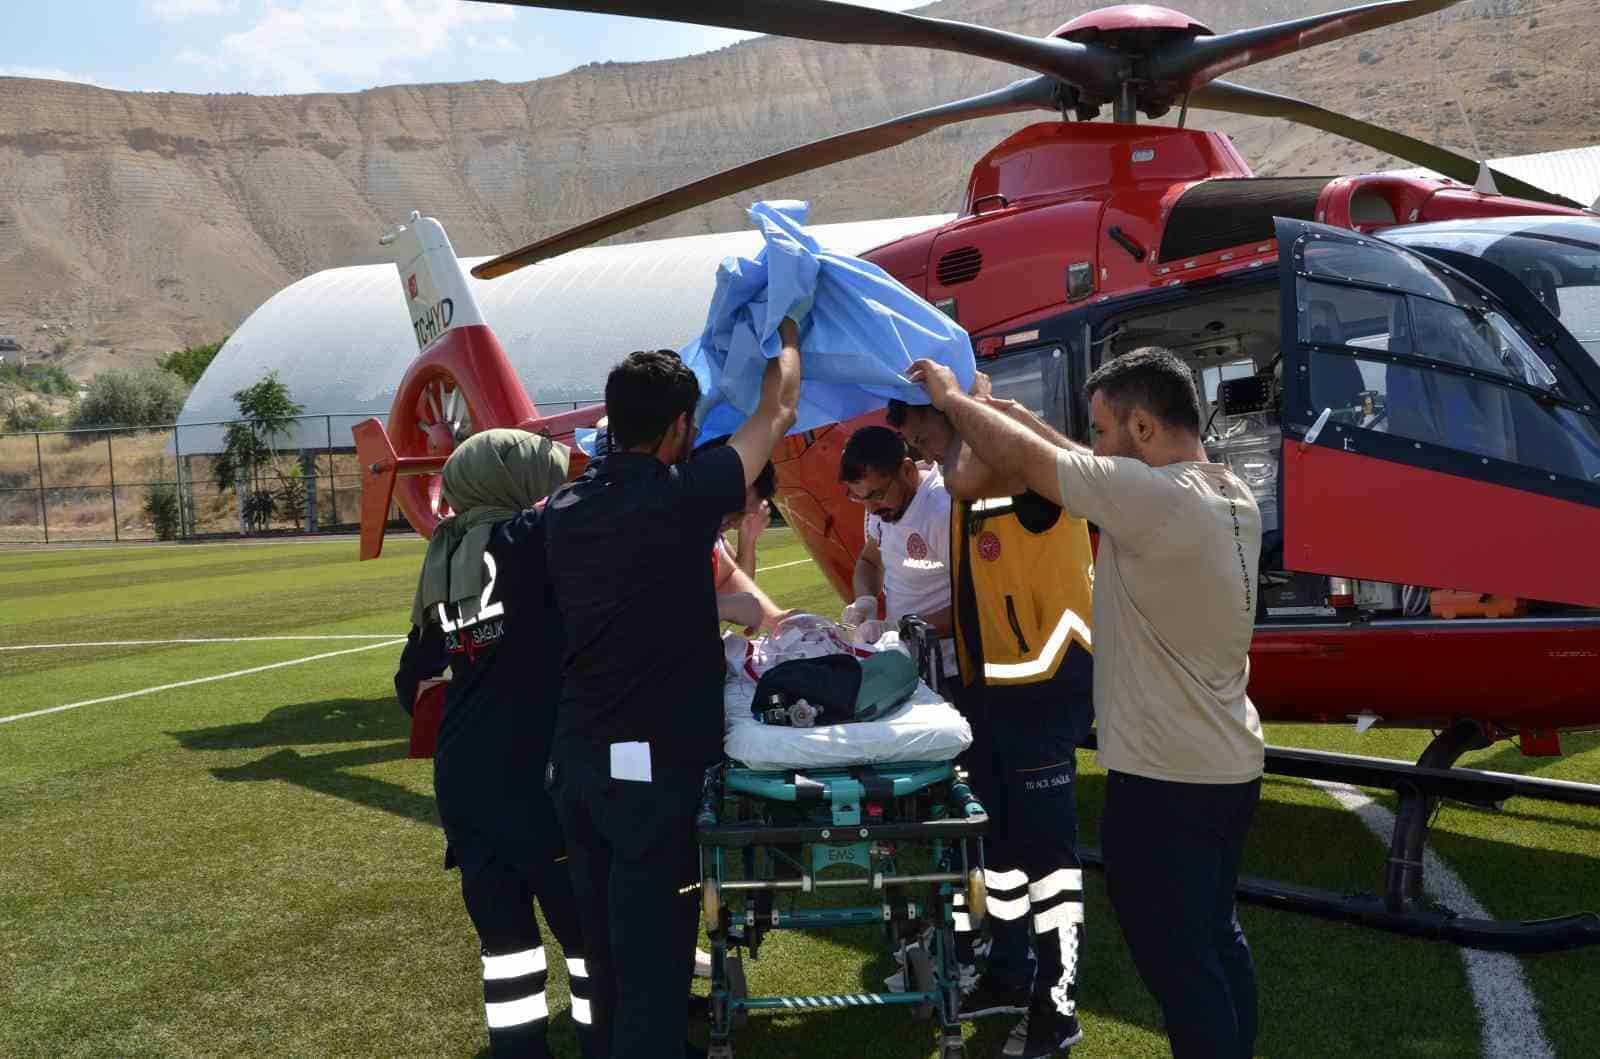 solunum sikintisi ceken bebek ambulans helikopterle sevk edildi